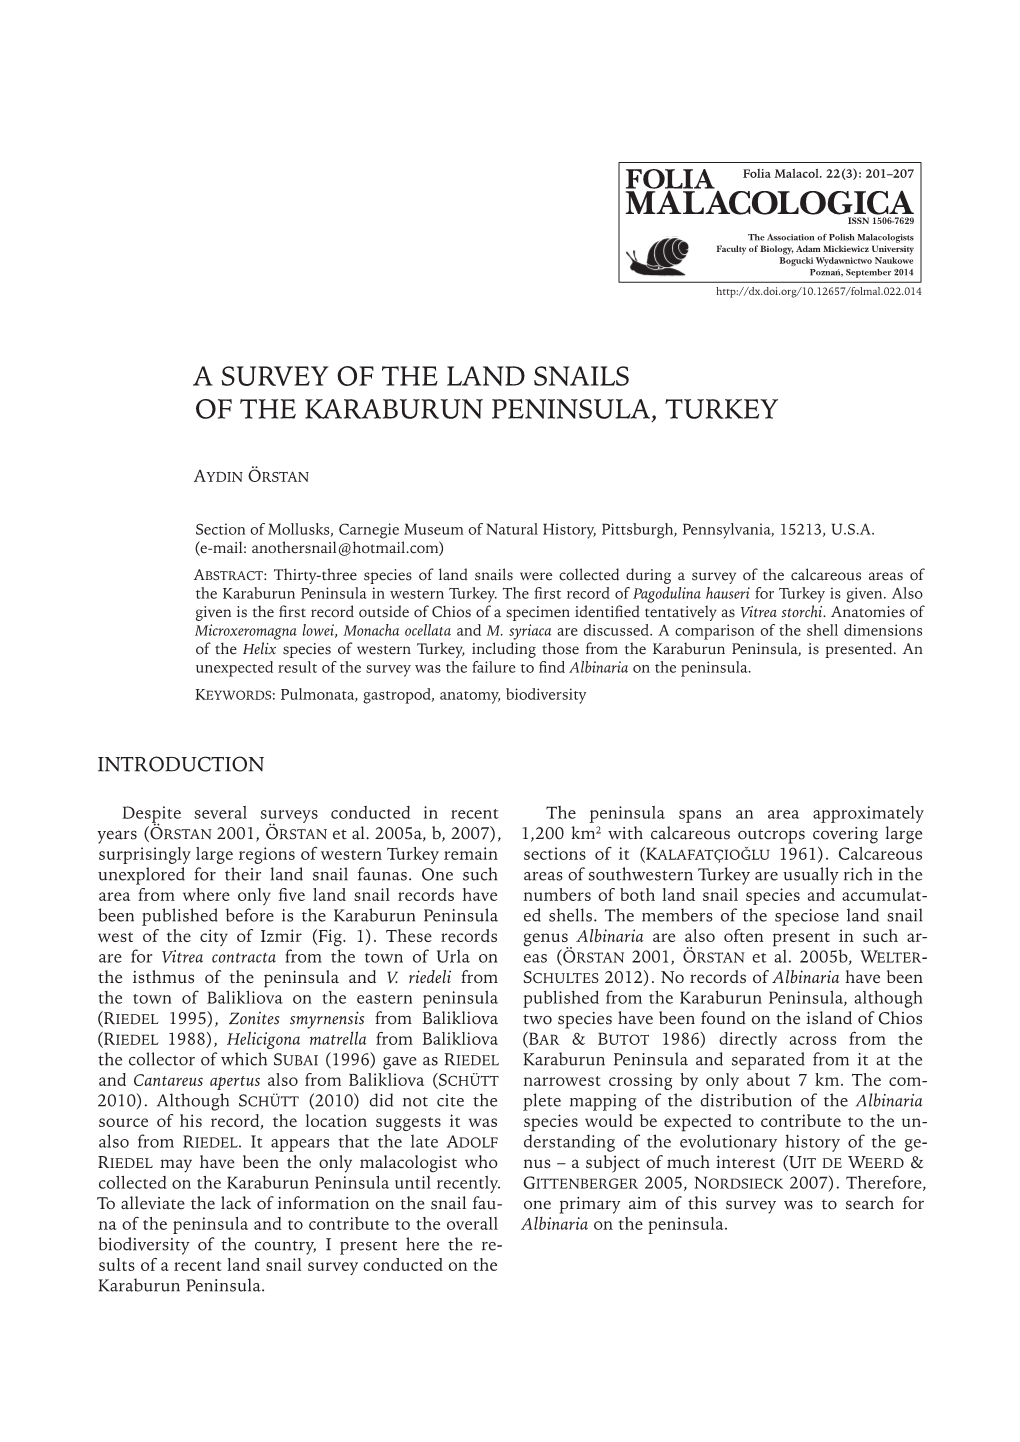 A Survey of the Land Snails of the Karaburun Peninsula, Turkey